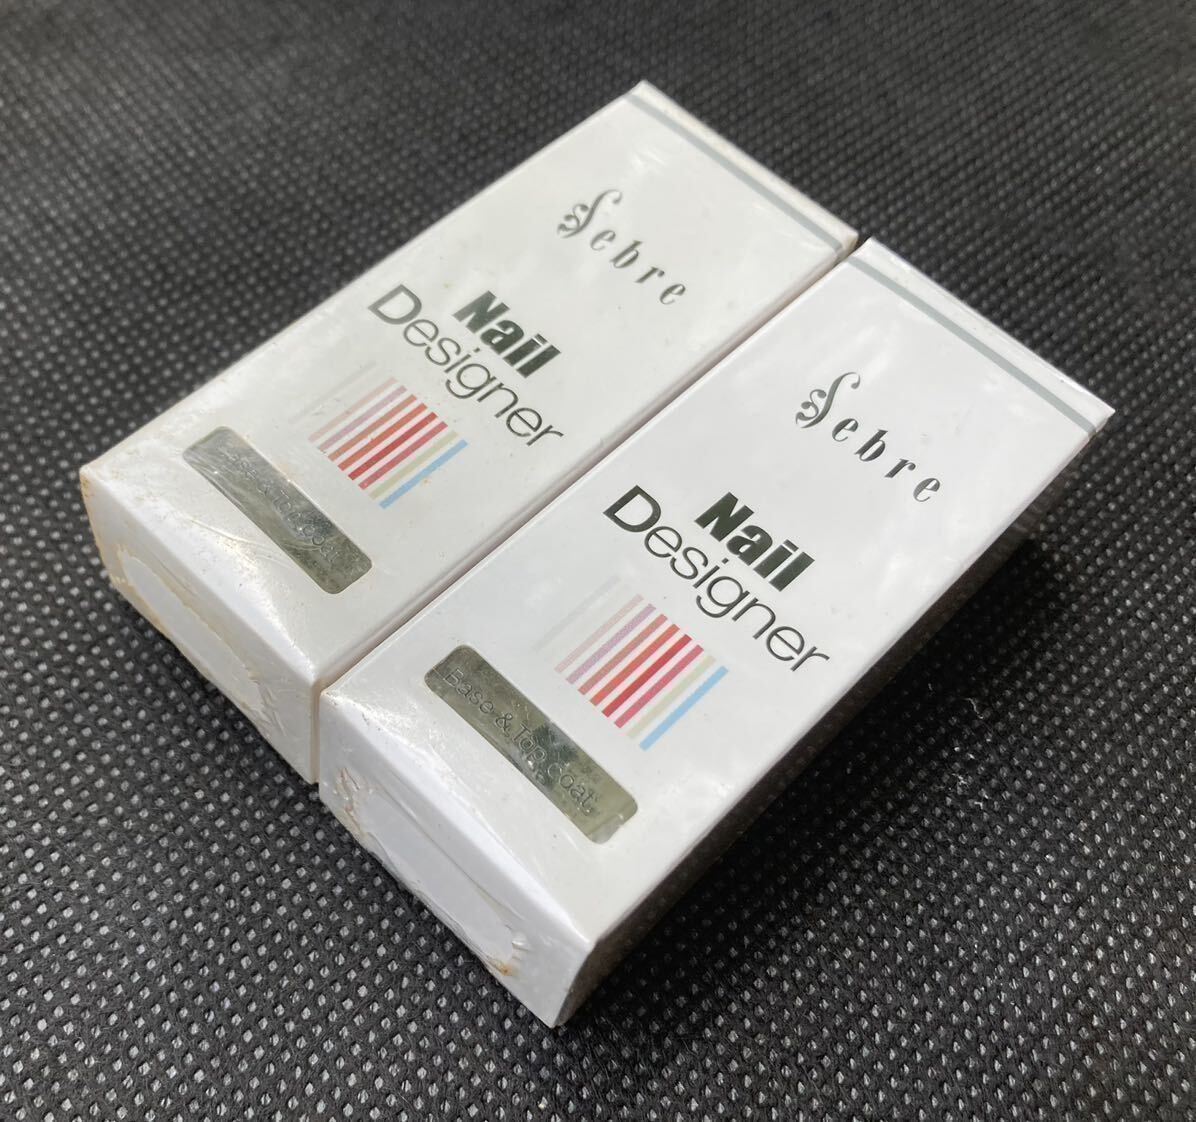 sina Lee cosmetics se blur nails supplies designer base & topcoat 10ml ×2 free shipping 